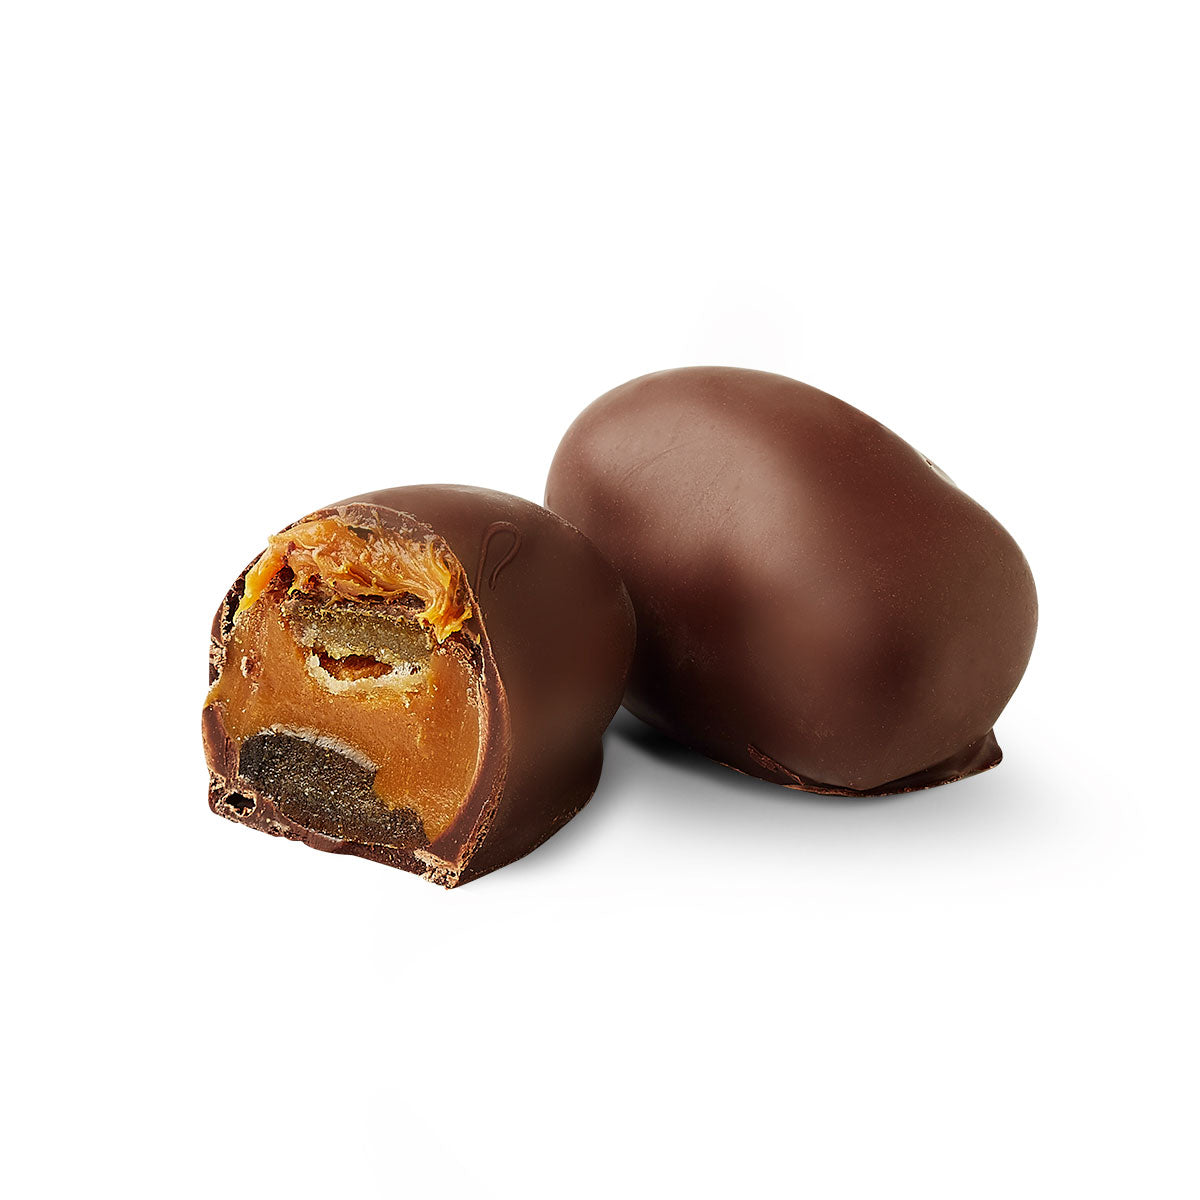 Orange Chocoteja Confection: Gourmet 0.92oz | 45% Cacao, Gluten-Free